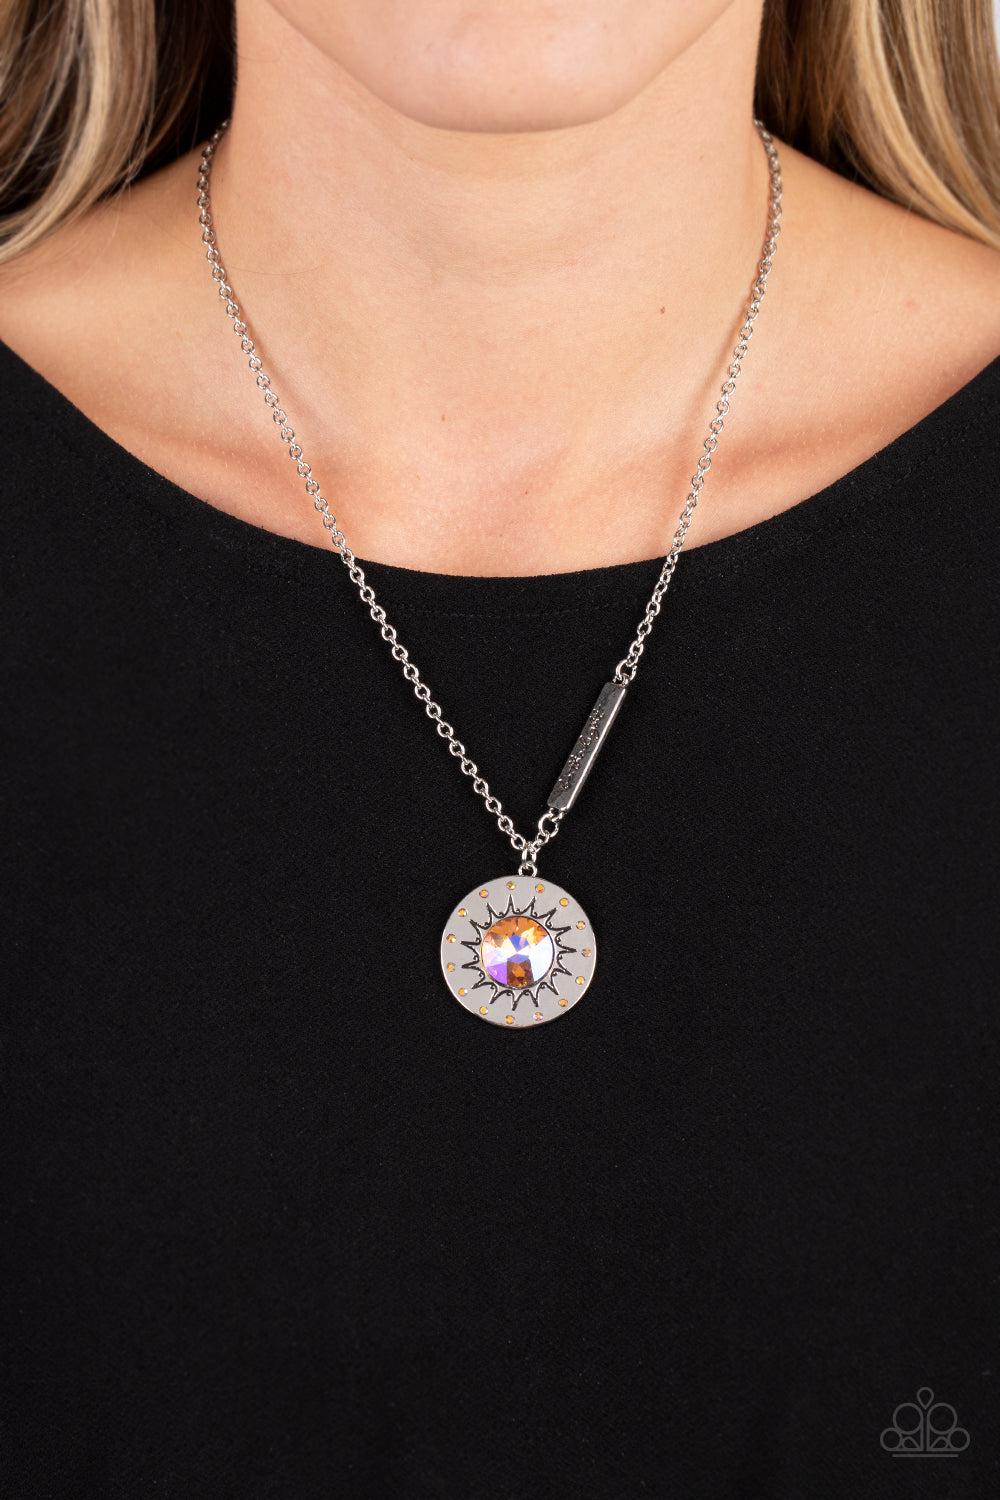 Sundial Dance Orange Inspirational Necklace - Paparazzi Accessories- lightbox - CarasShop.com - $5 Jewelry by Cara Jewels